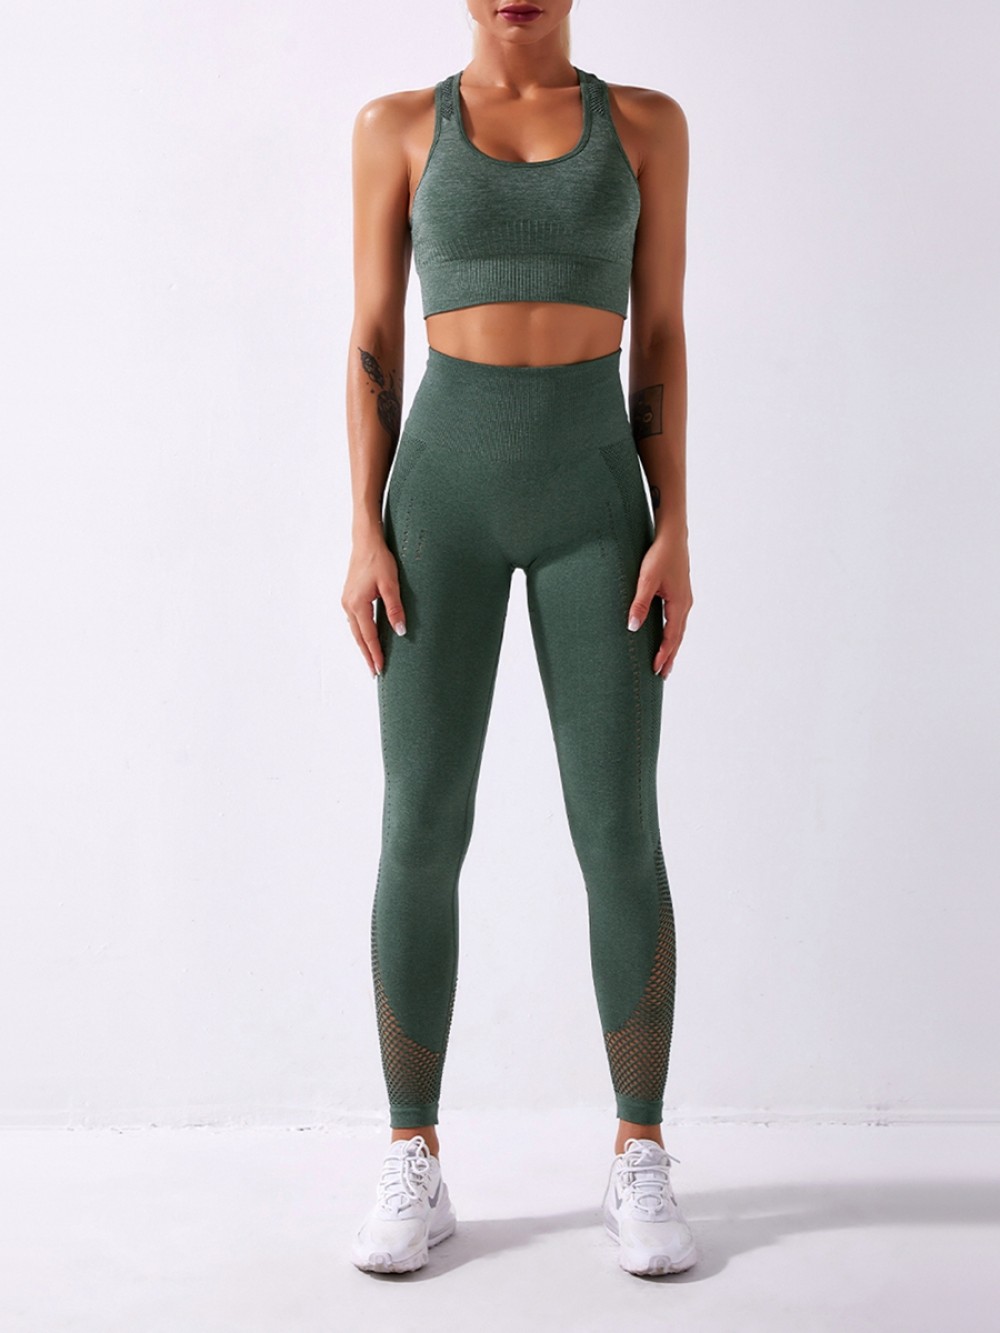 Blackish Green Wide Straps Yoga Bra Seamless Legging Suit Woman